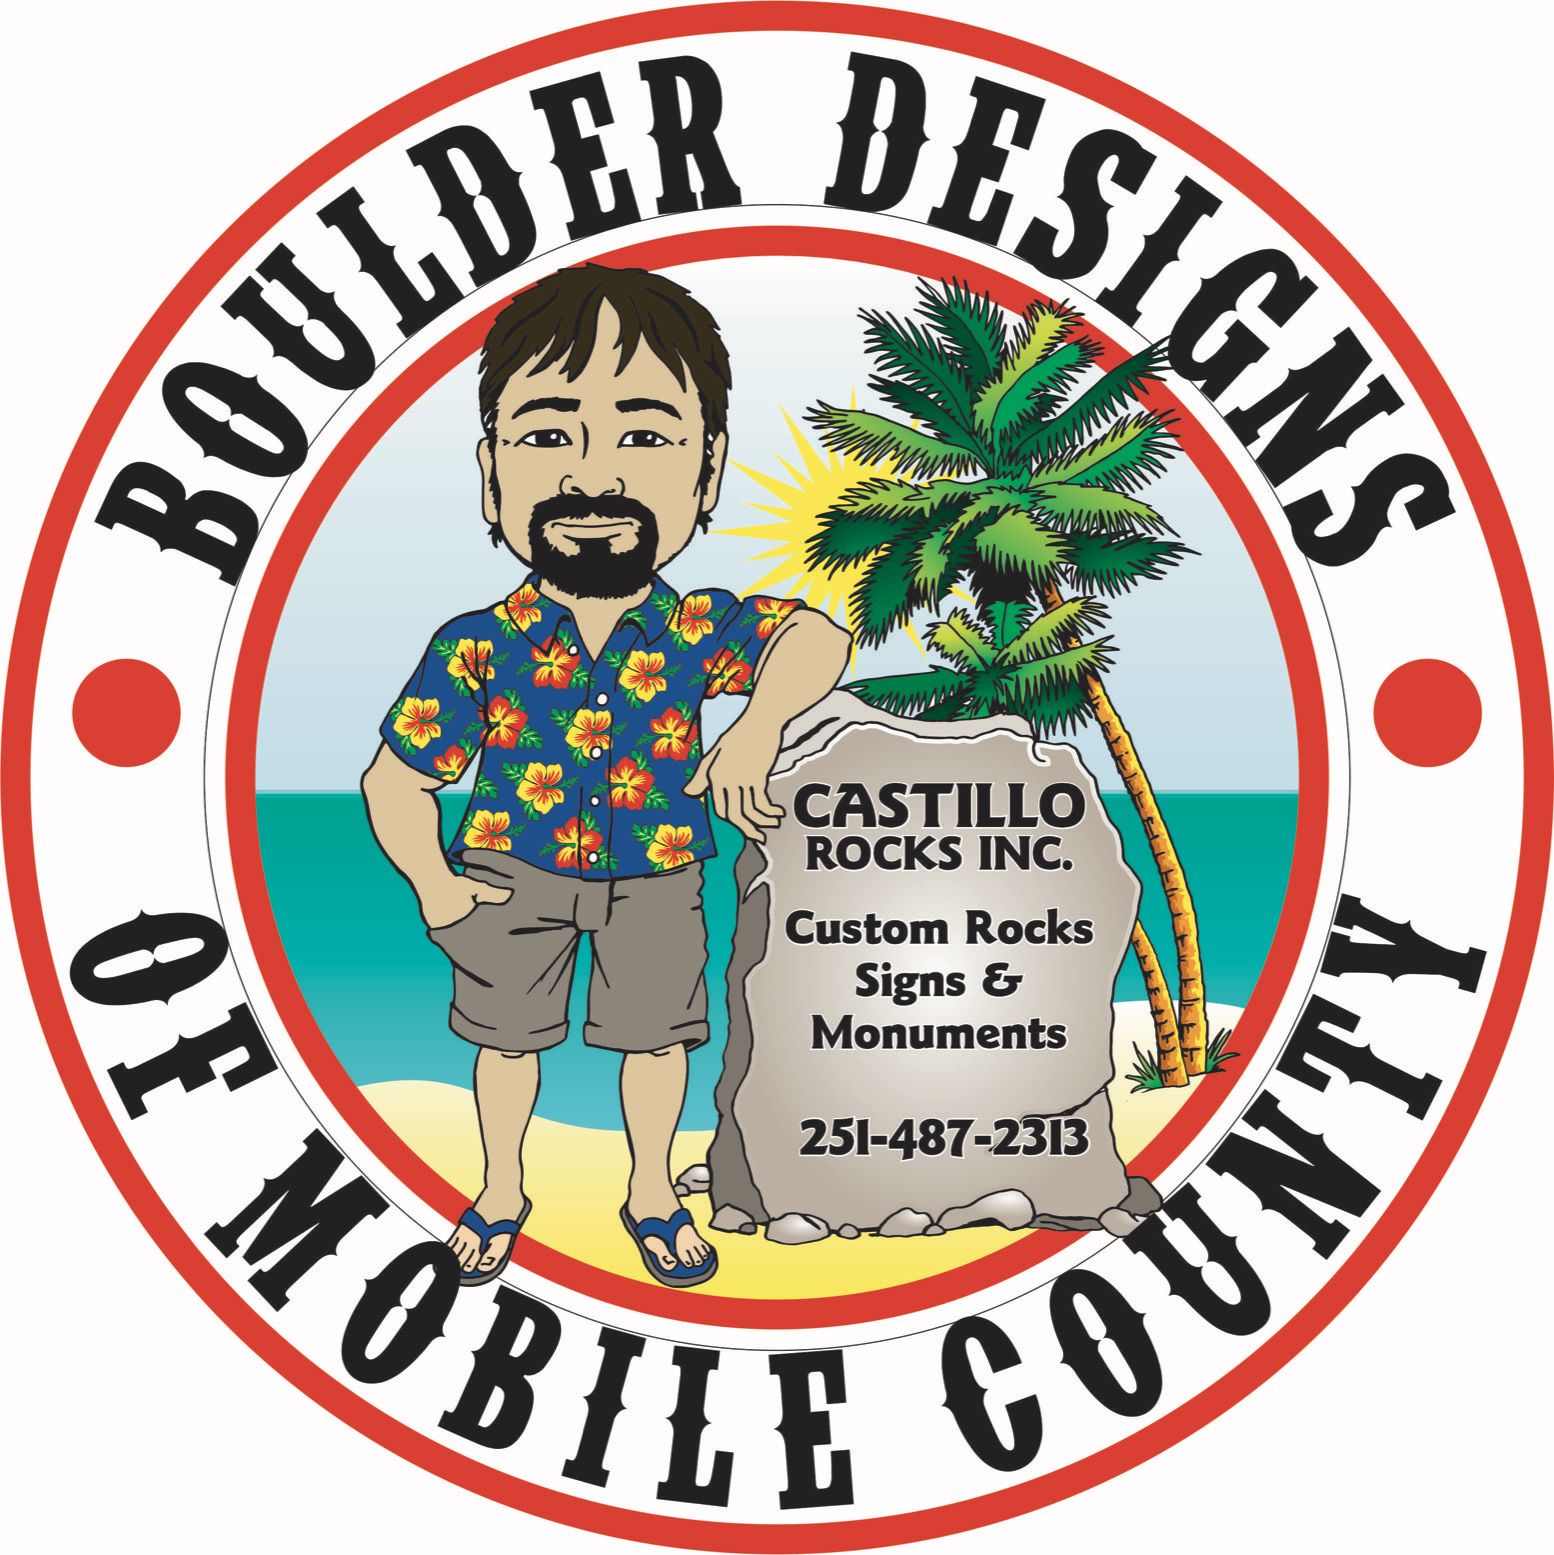 Boulder Designs of Mobile County